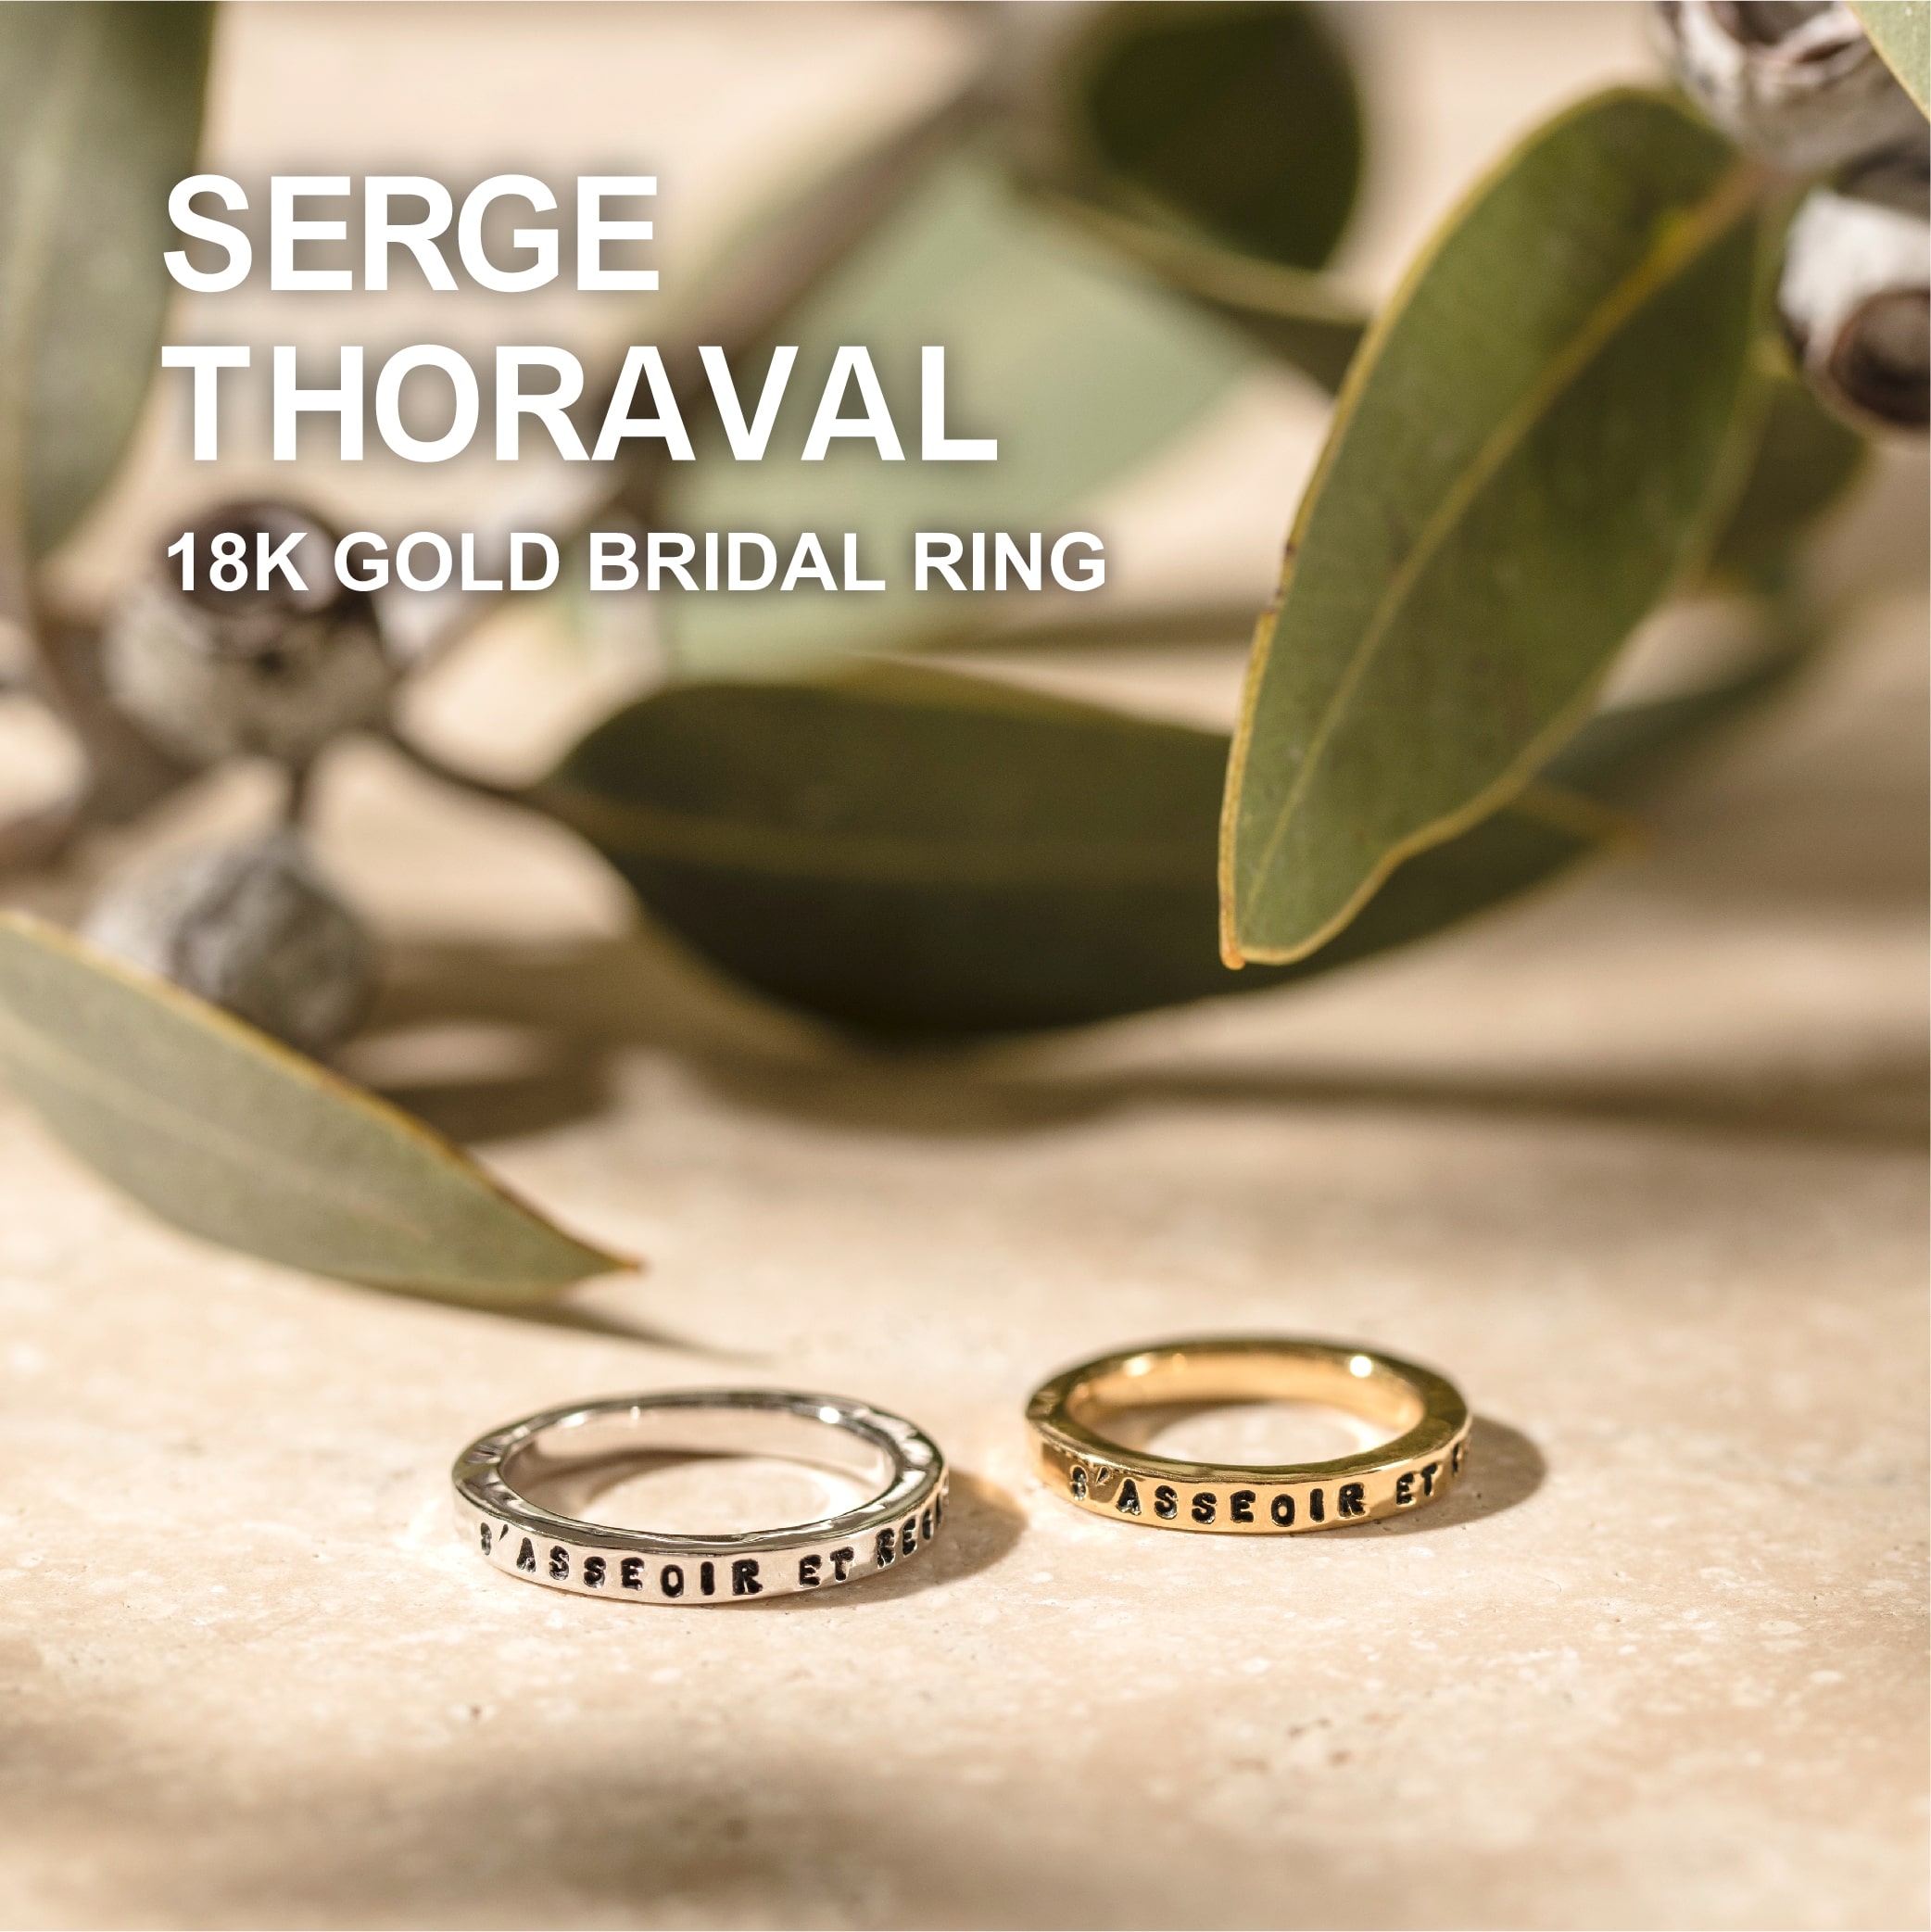 SERGE THORAVAL 18K GOLD BRIDAL RING | H.P.FRANCE公式サイト